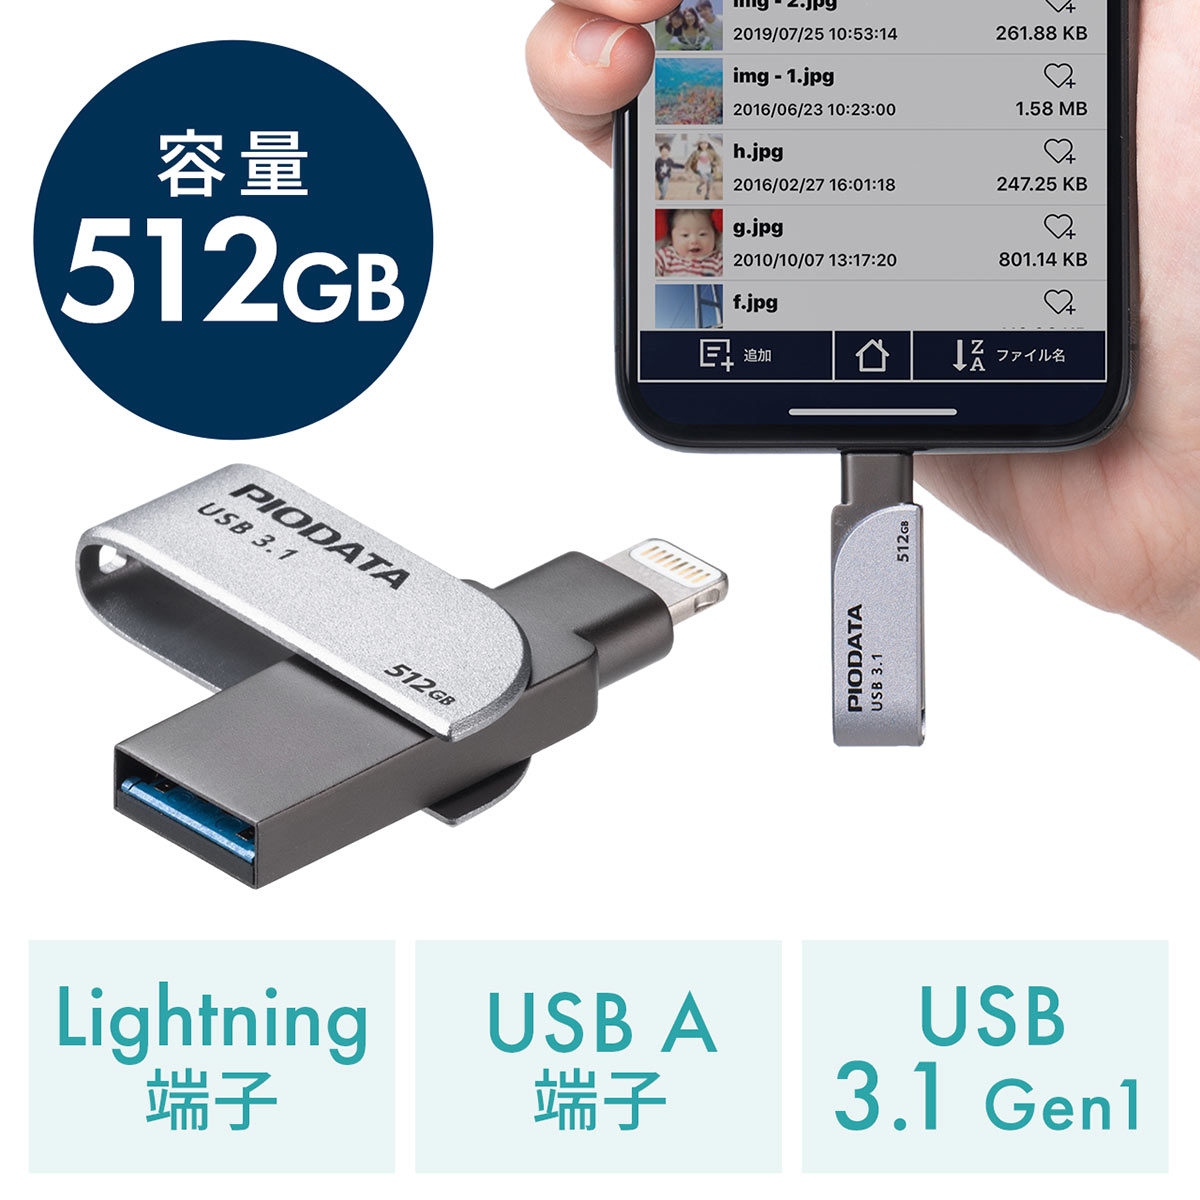 600-IPL512GX3 サンワダイレクト限定品 ネコポス対応 送料無料 iPhone iPad USBメモリ 512GB USB3.1 Gen1 スイング式 格安 正規取扱店 3.0 MFi認証 Lightning対応 USB3.2